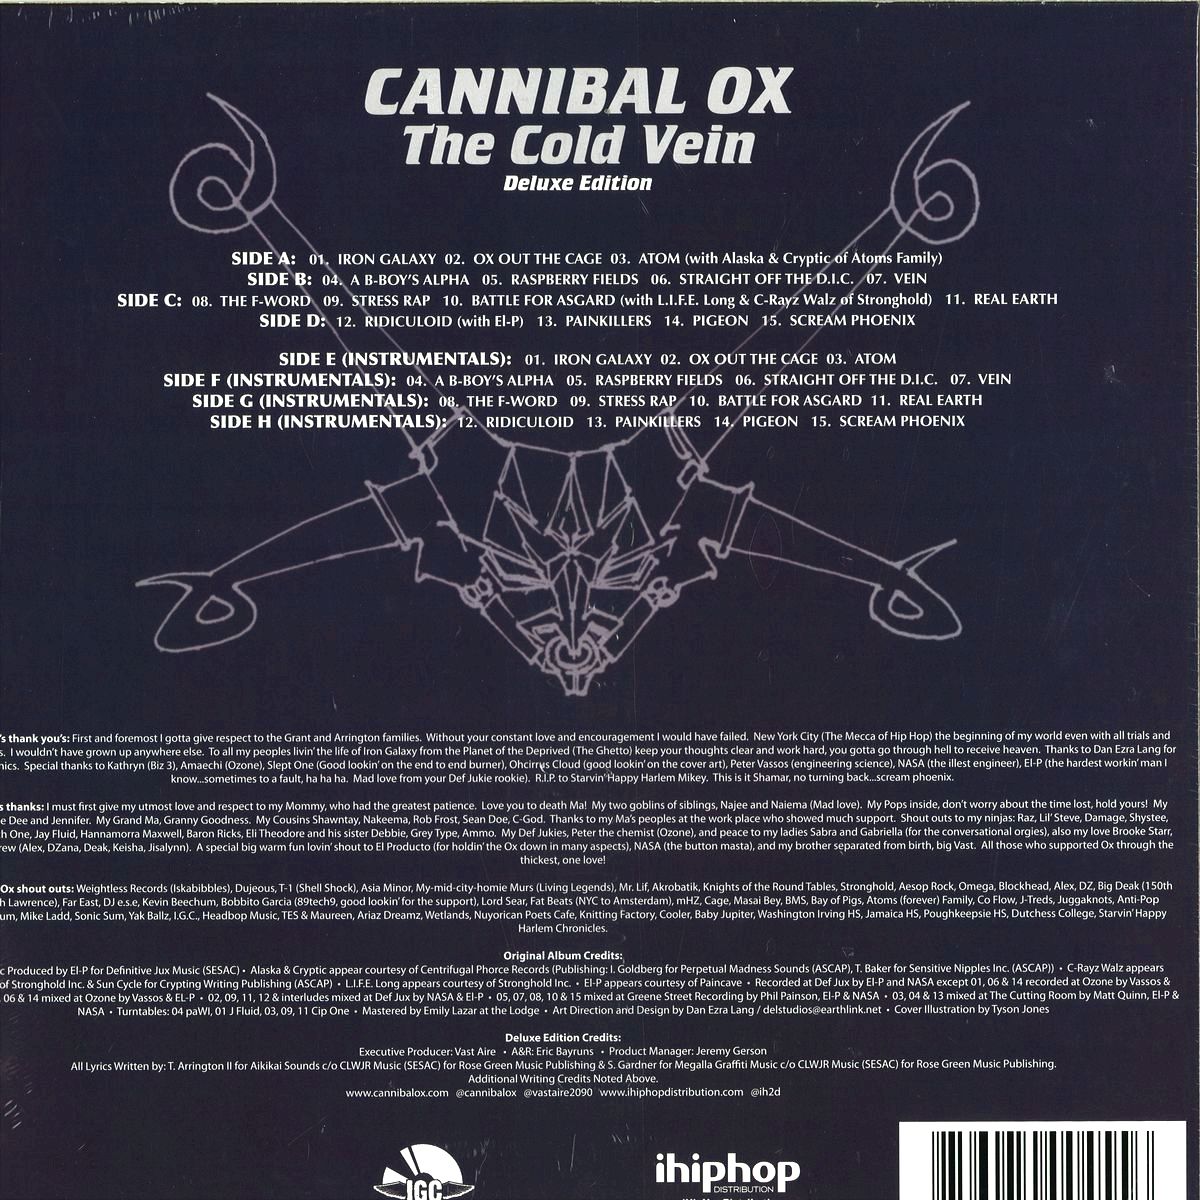 Cannibal ox – fight for asgard lyrics entire family dear    

To copy